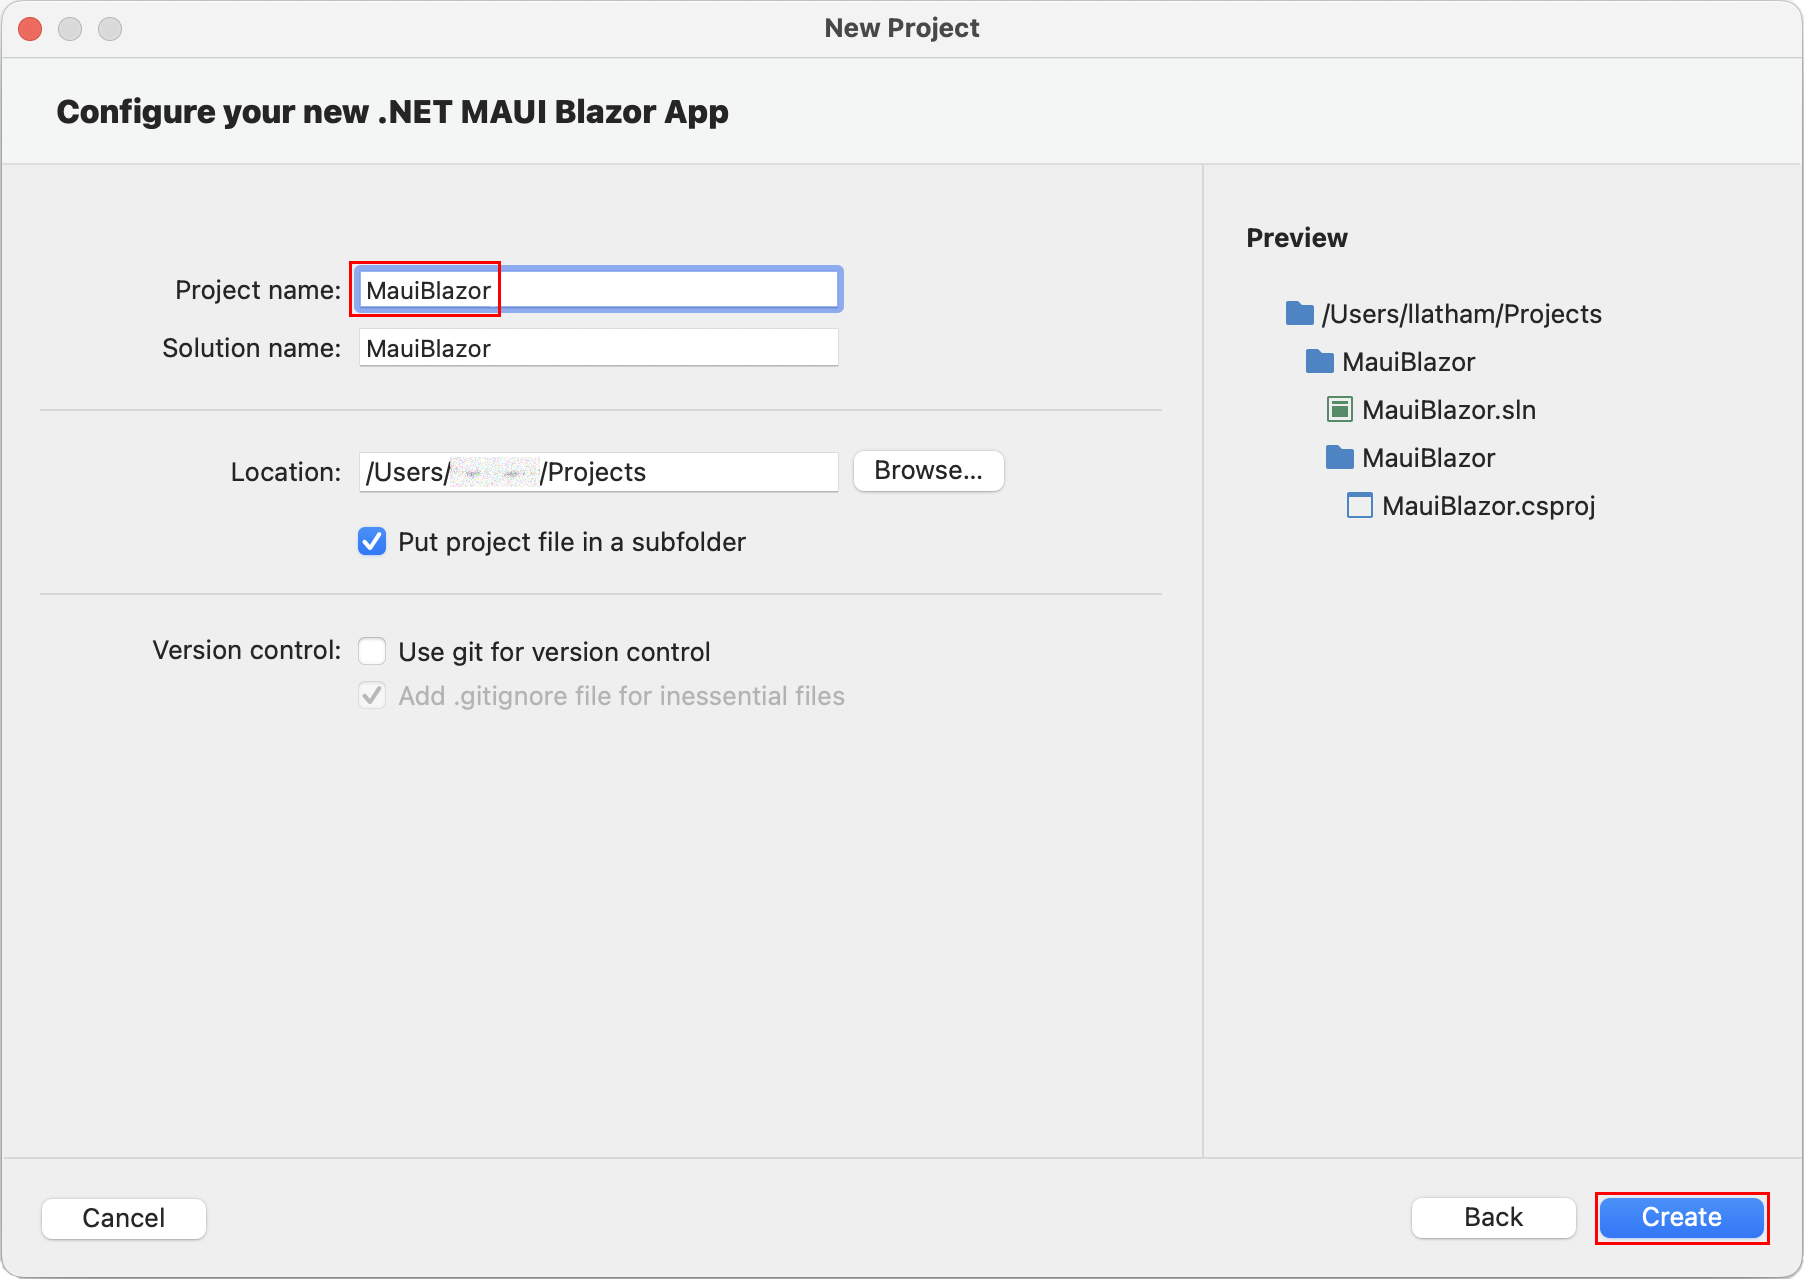 Configure your new .NET MAUI Blazor App dialog with an project name of MauiBlazor.